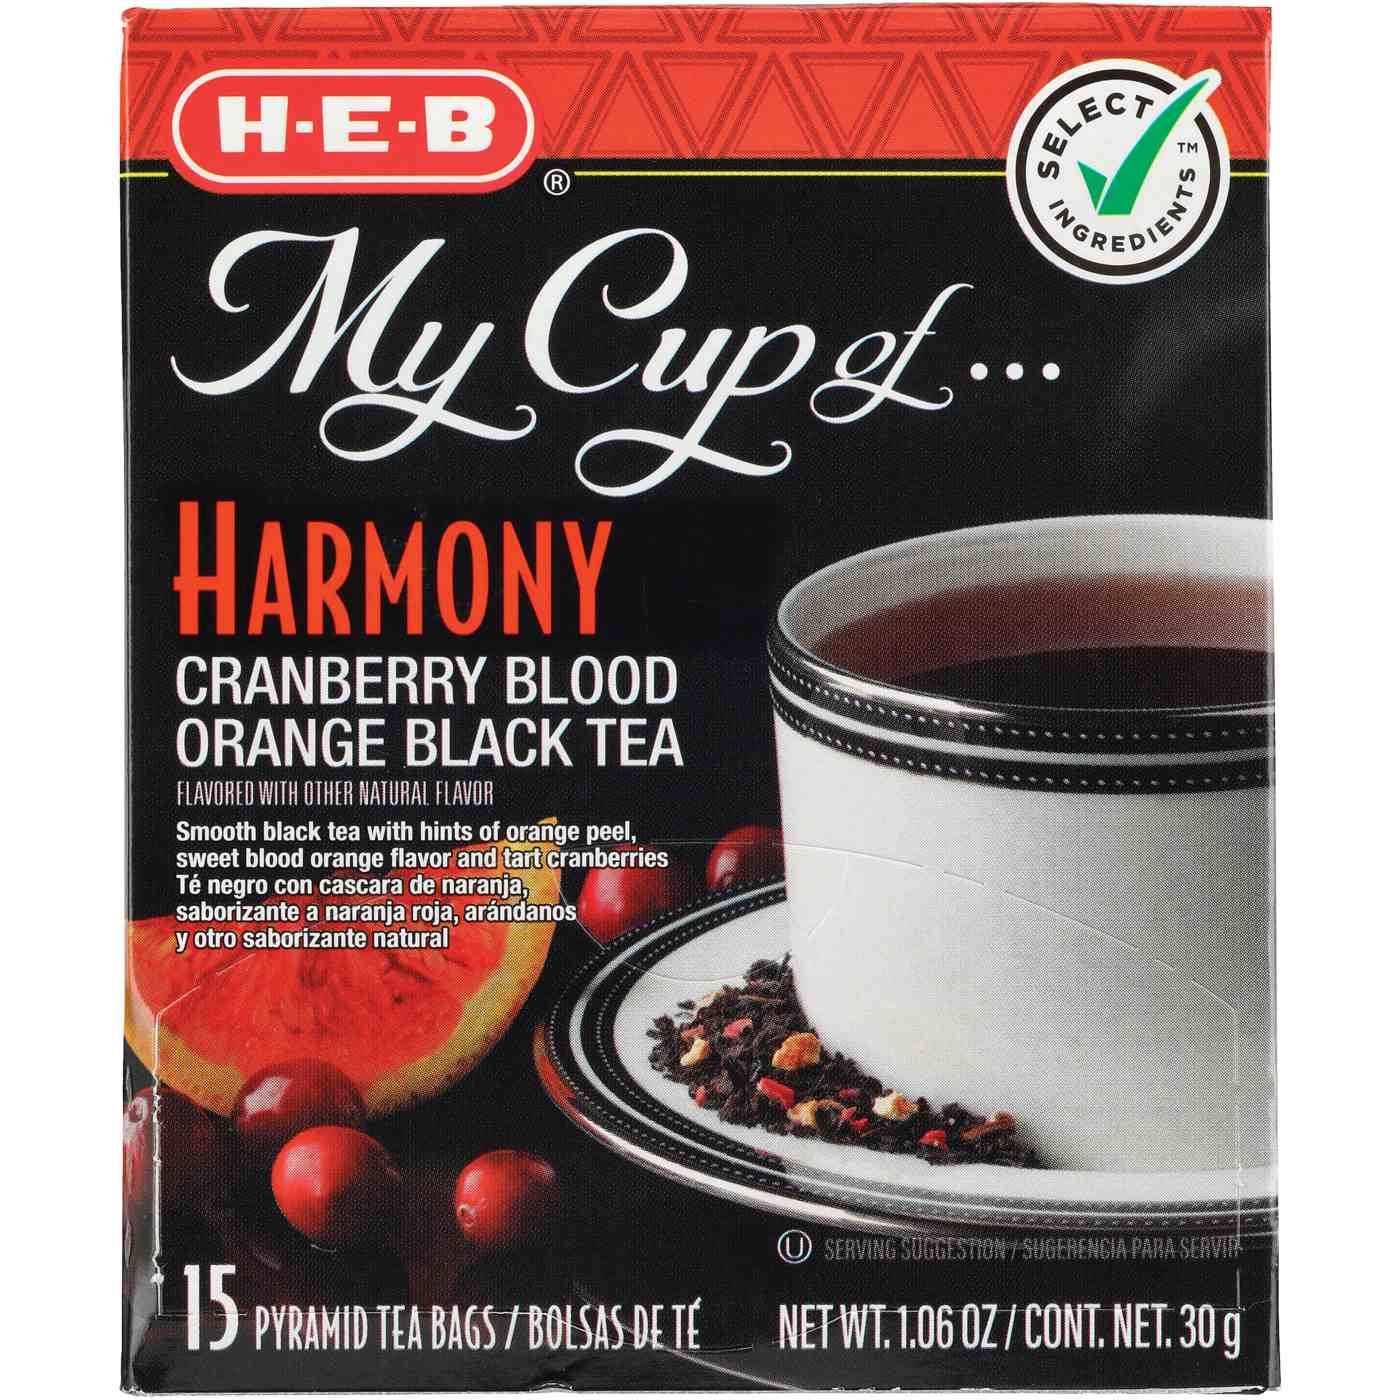 H-E-B My Cup of Harmony Cranberry Blood Orange Black Tea, Pyramid Tea Bags; image 1 of 2